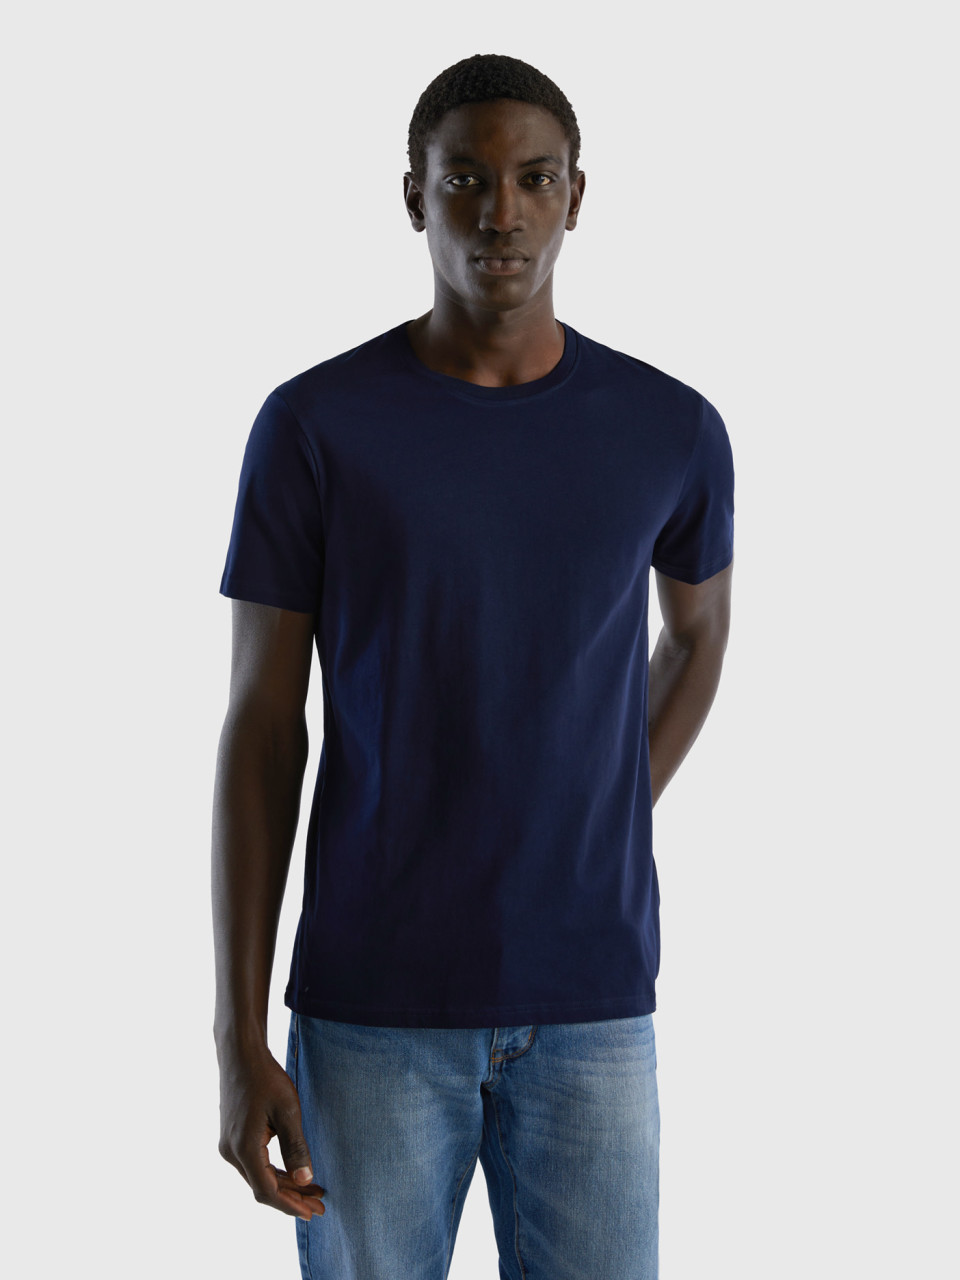 Benetton, T-shirt Blu Scuro, Blu Scuro, Uomo